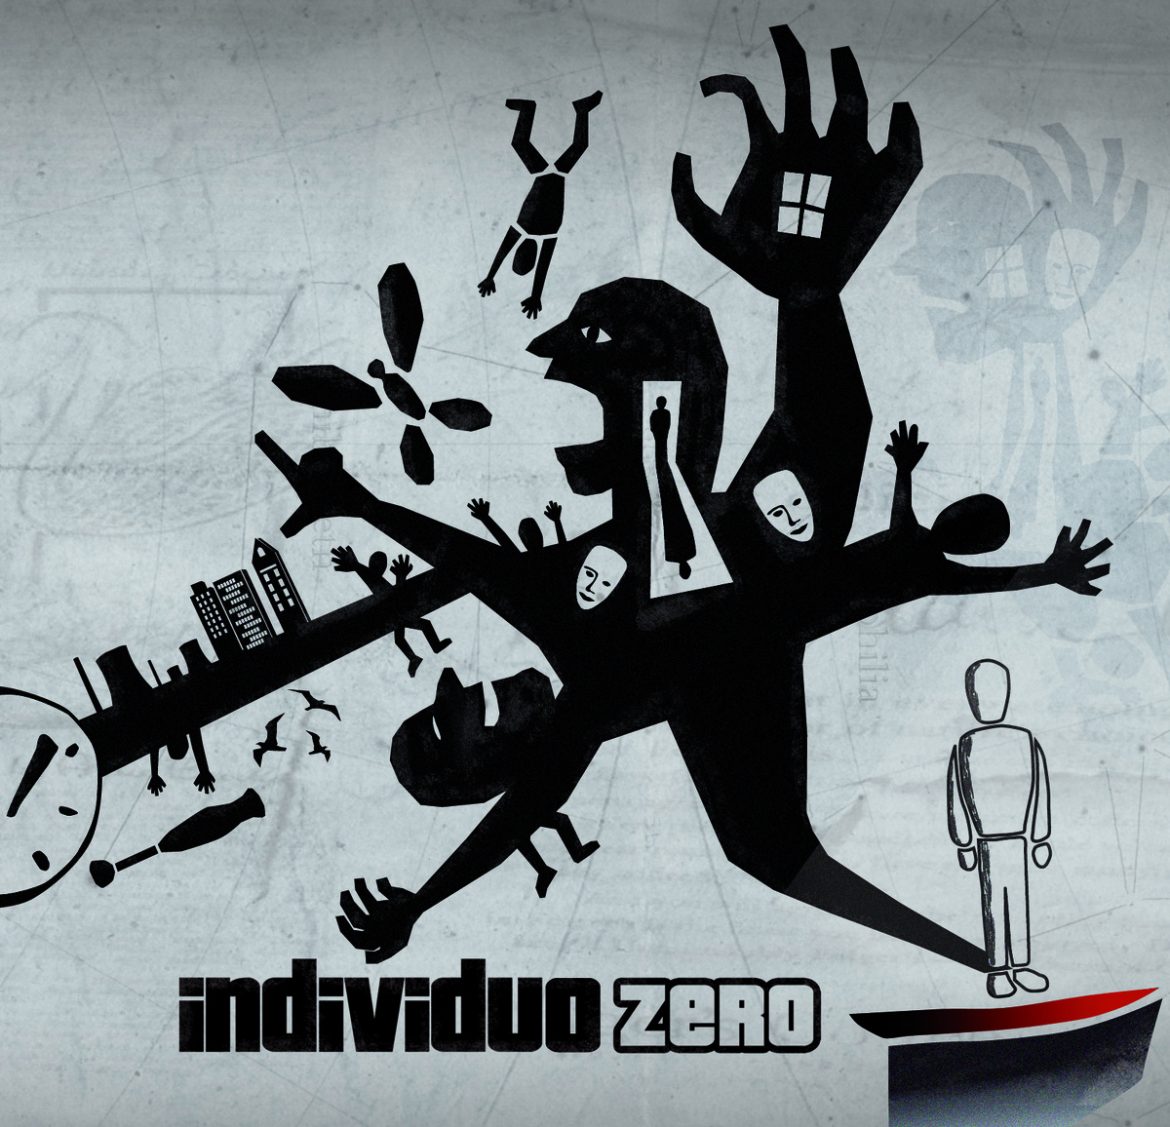 Individuo Zero debuta con un EP